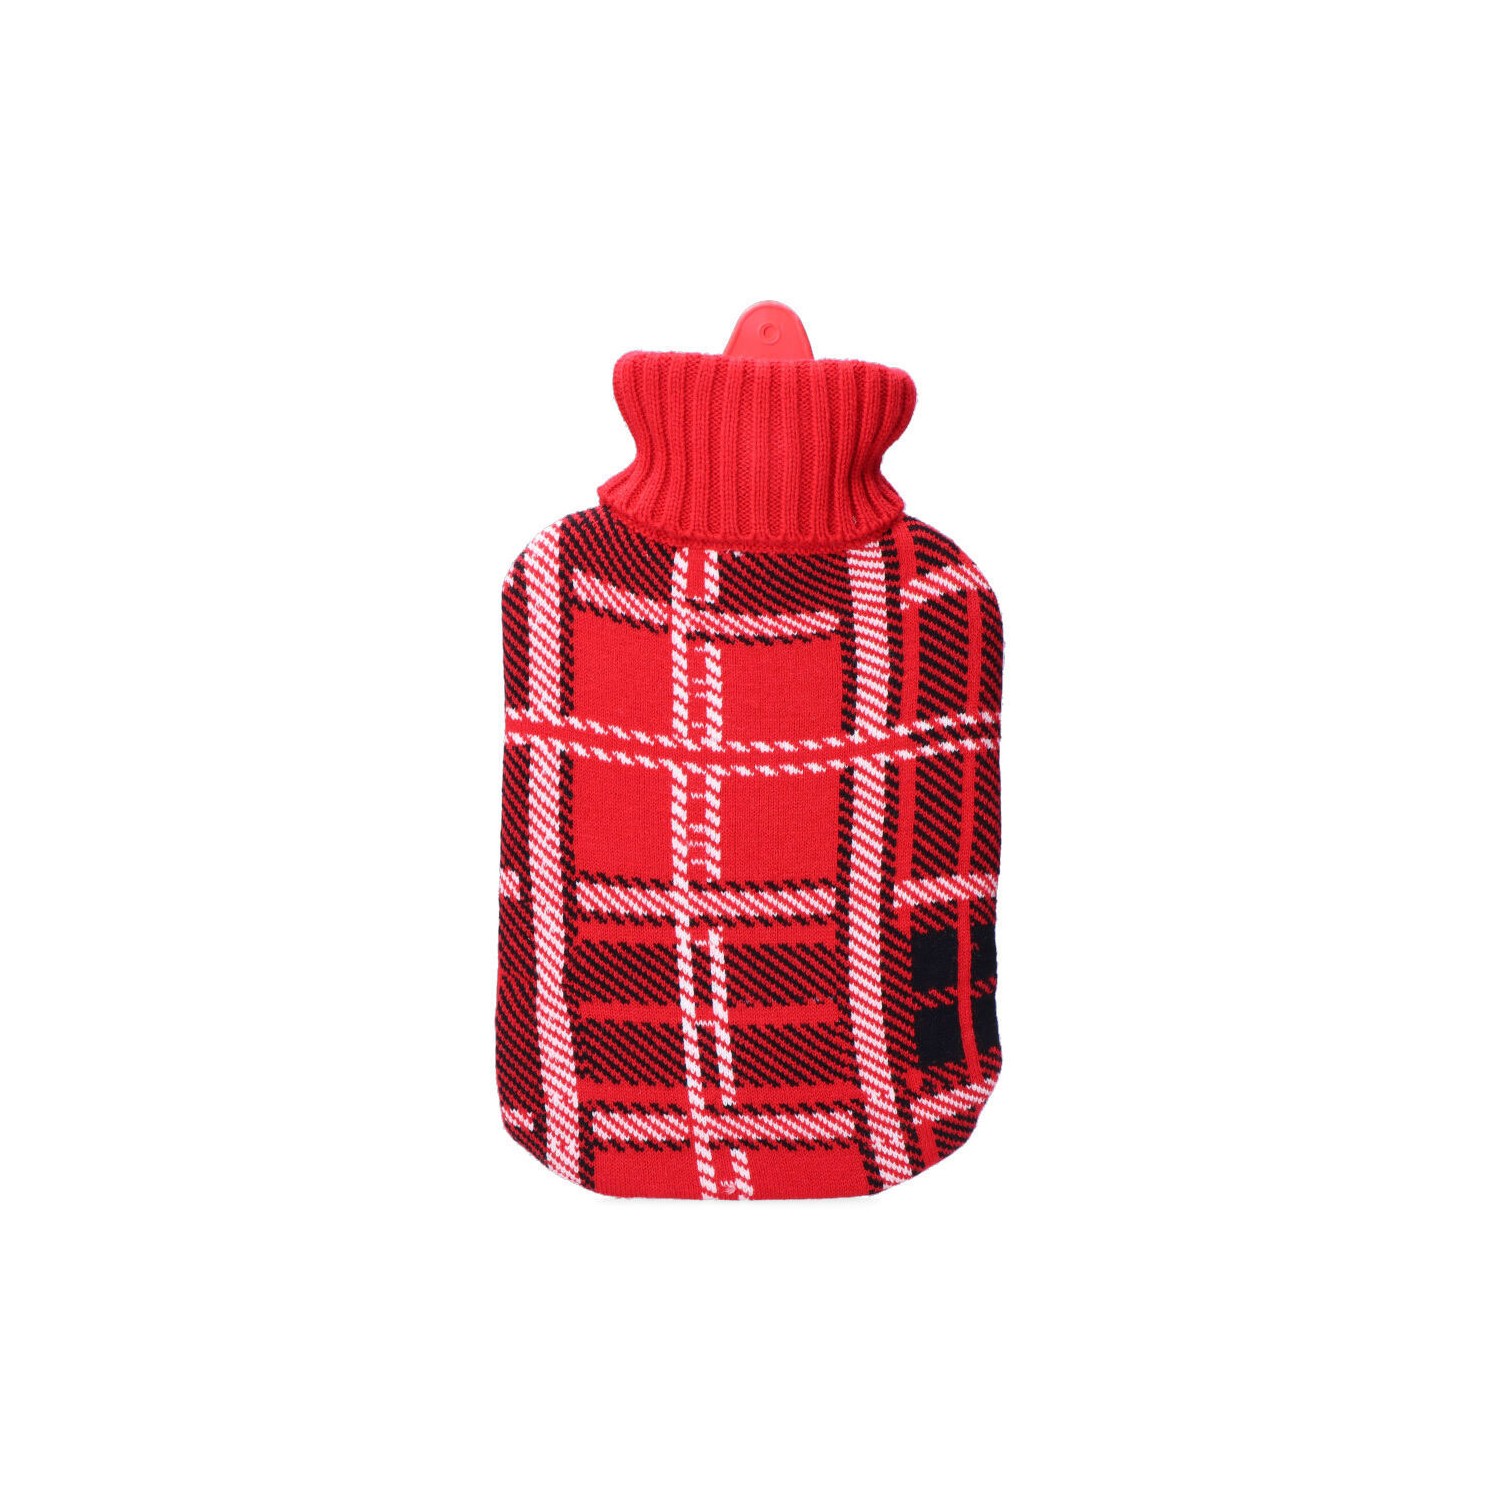 Bolsa de agua caliente. modelo clasico escoces rojo 2 l edm